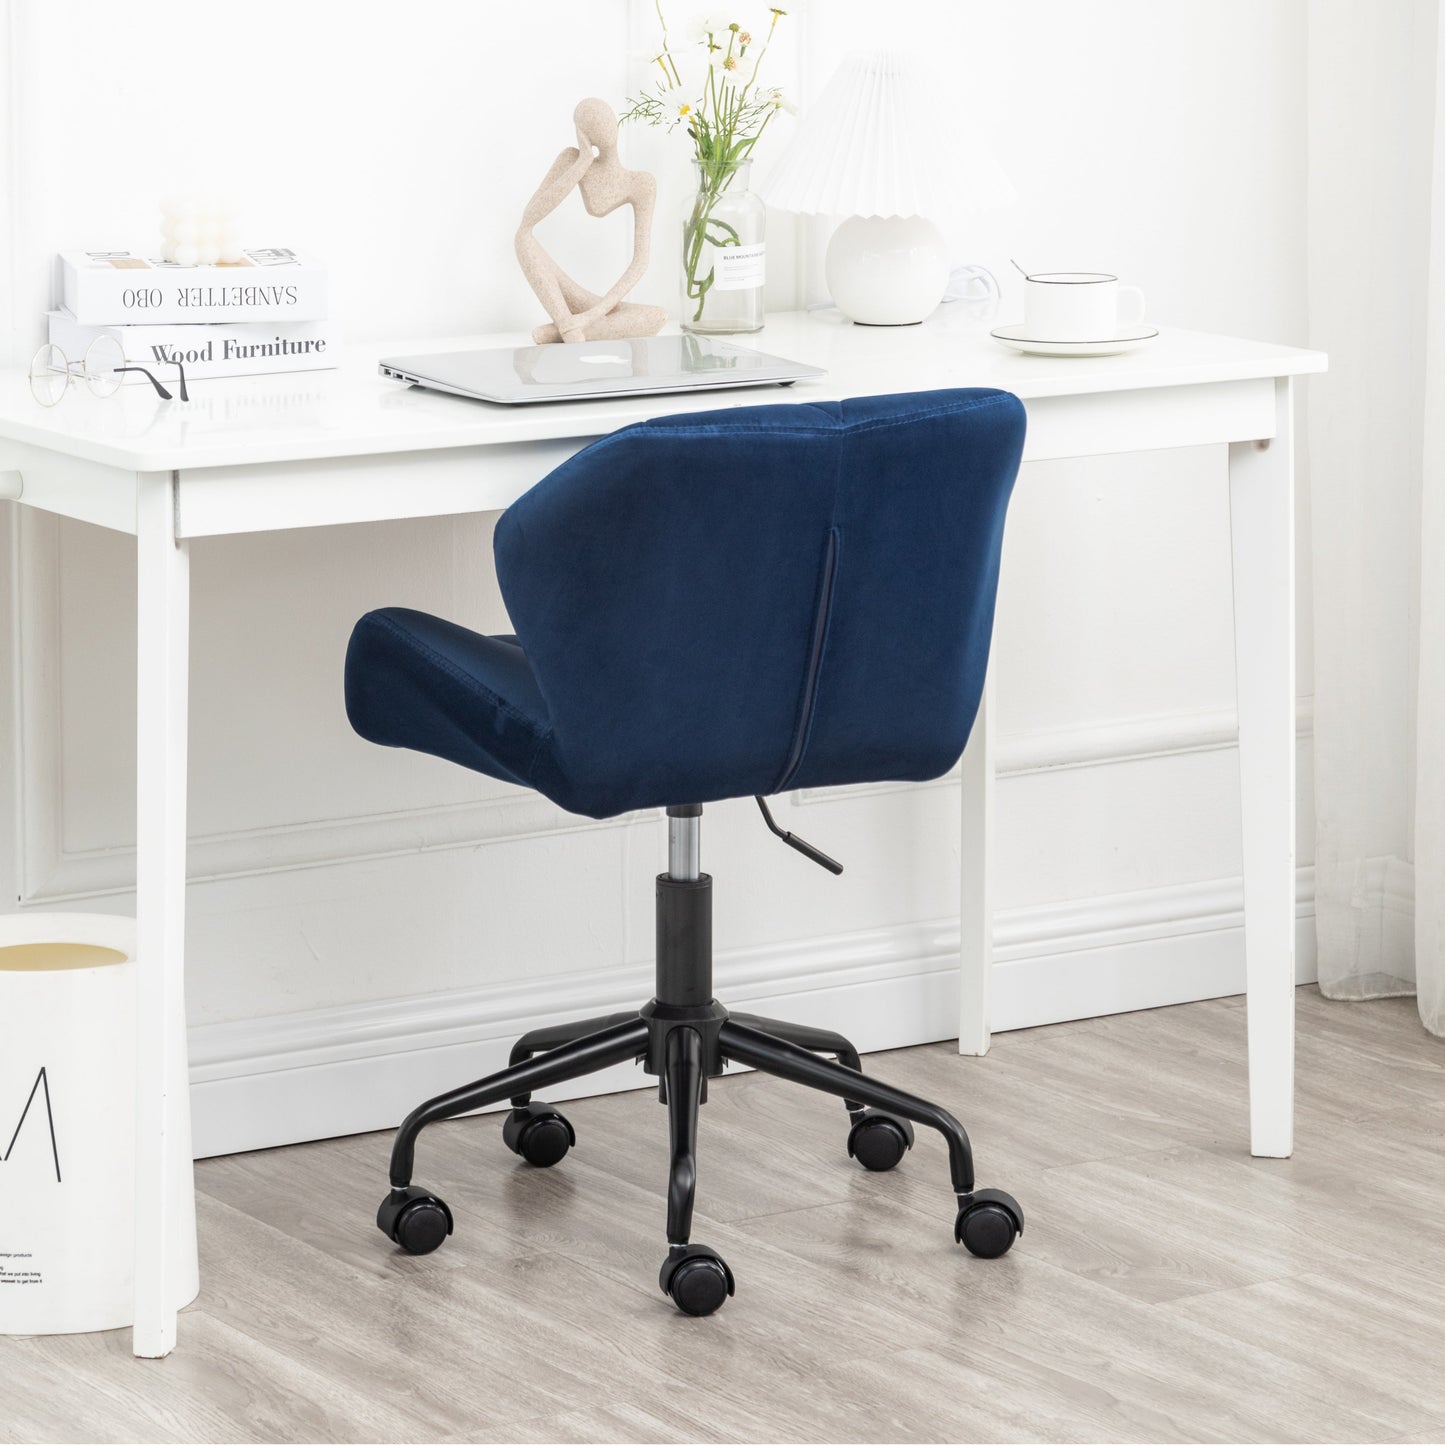 Eldon Diamond Tufted Adjustable Swivel Office Chair, Blue